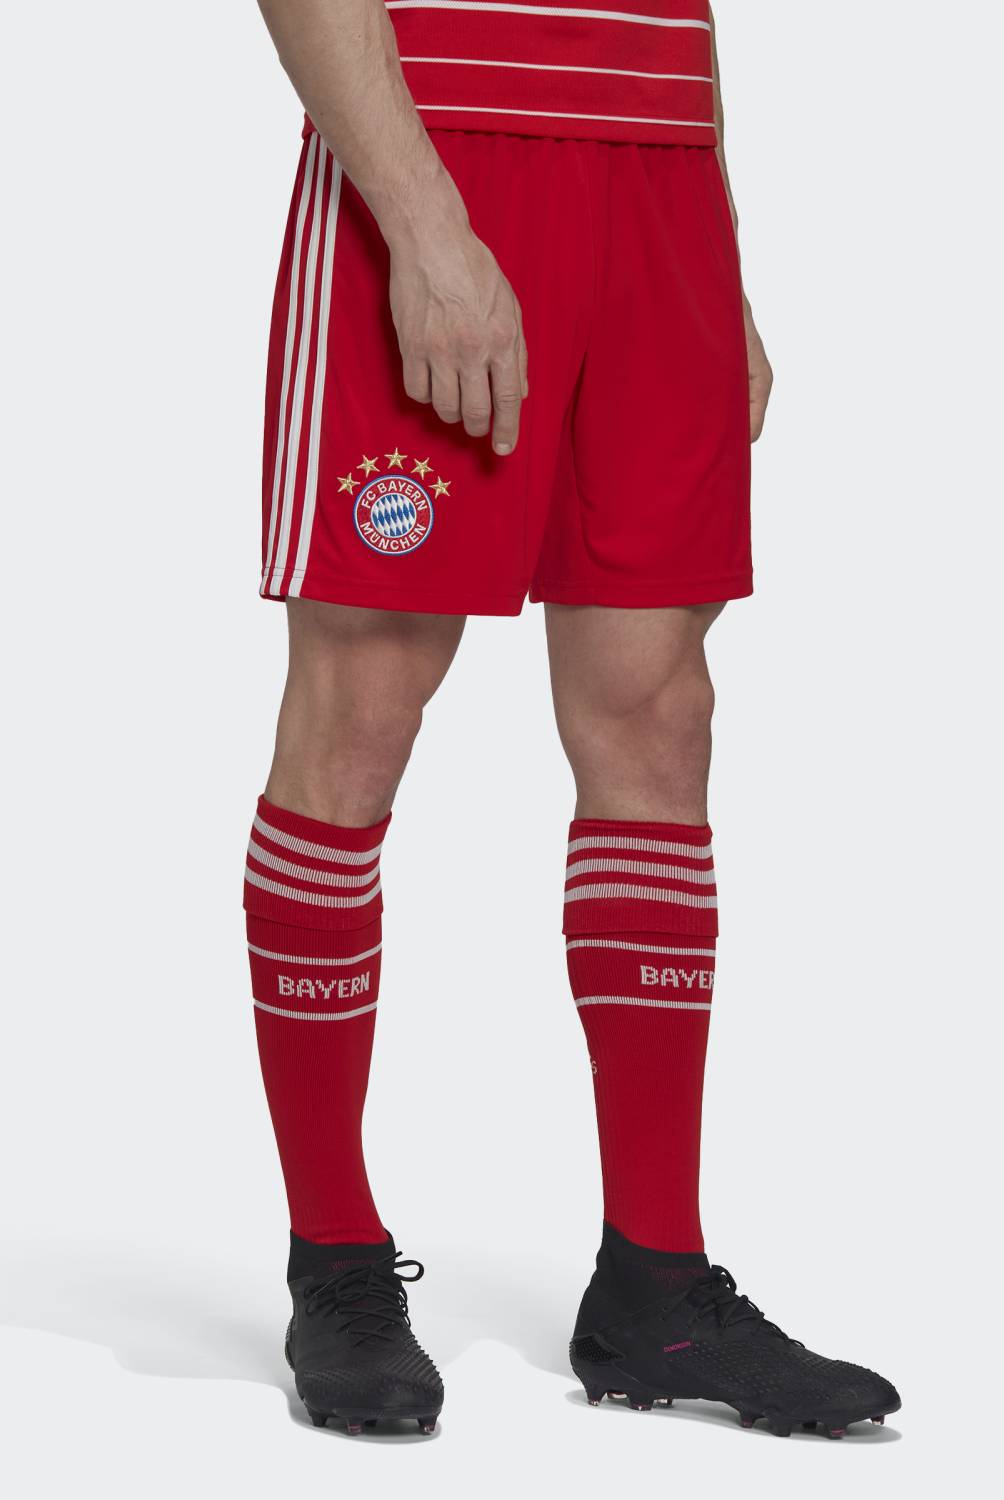 ADIDAS - Adidas Short Deportivo de Fútbol Bayern Munich Local Hombre